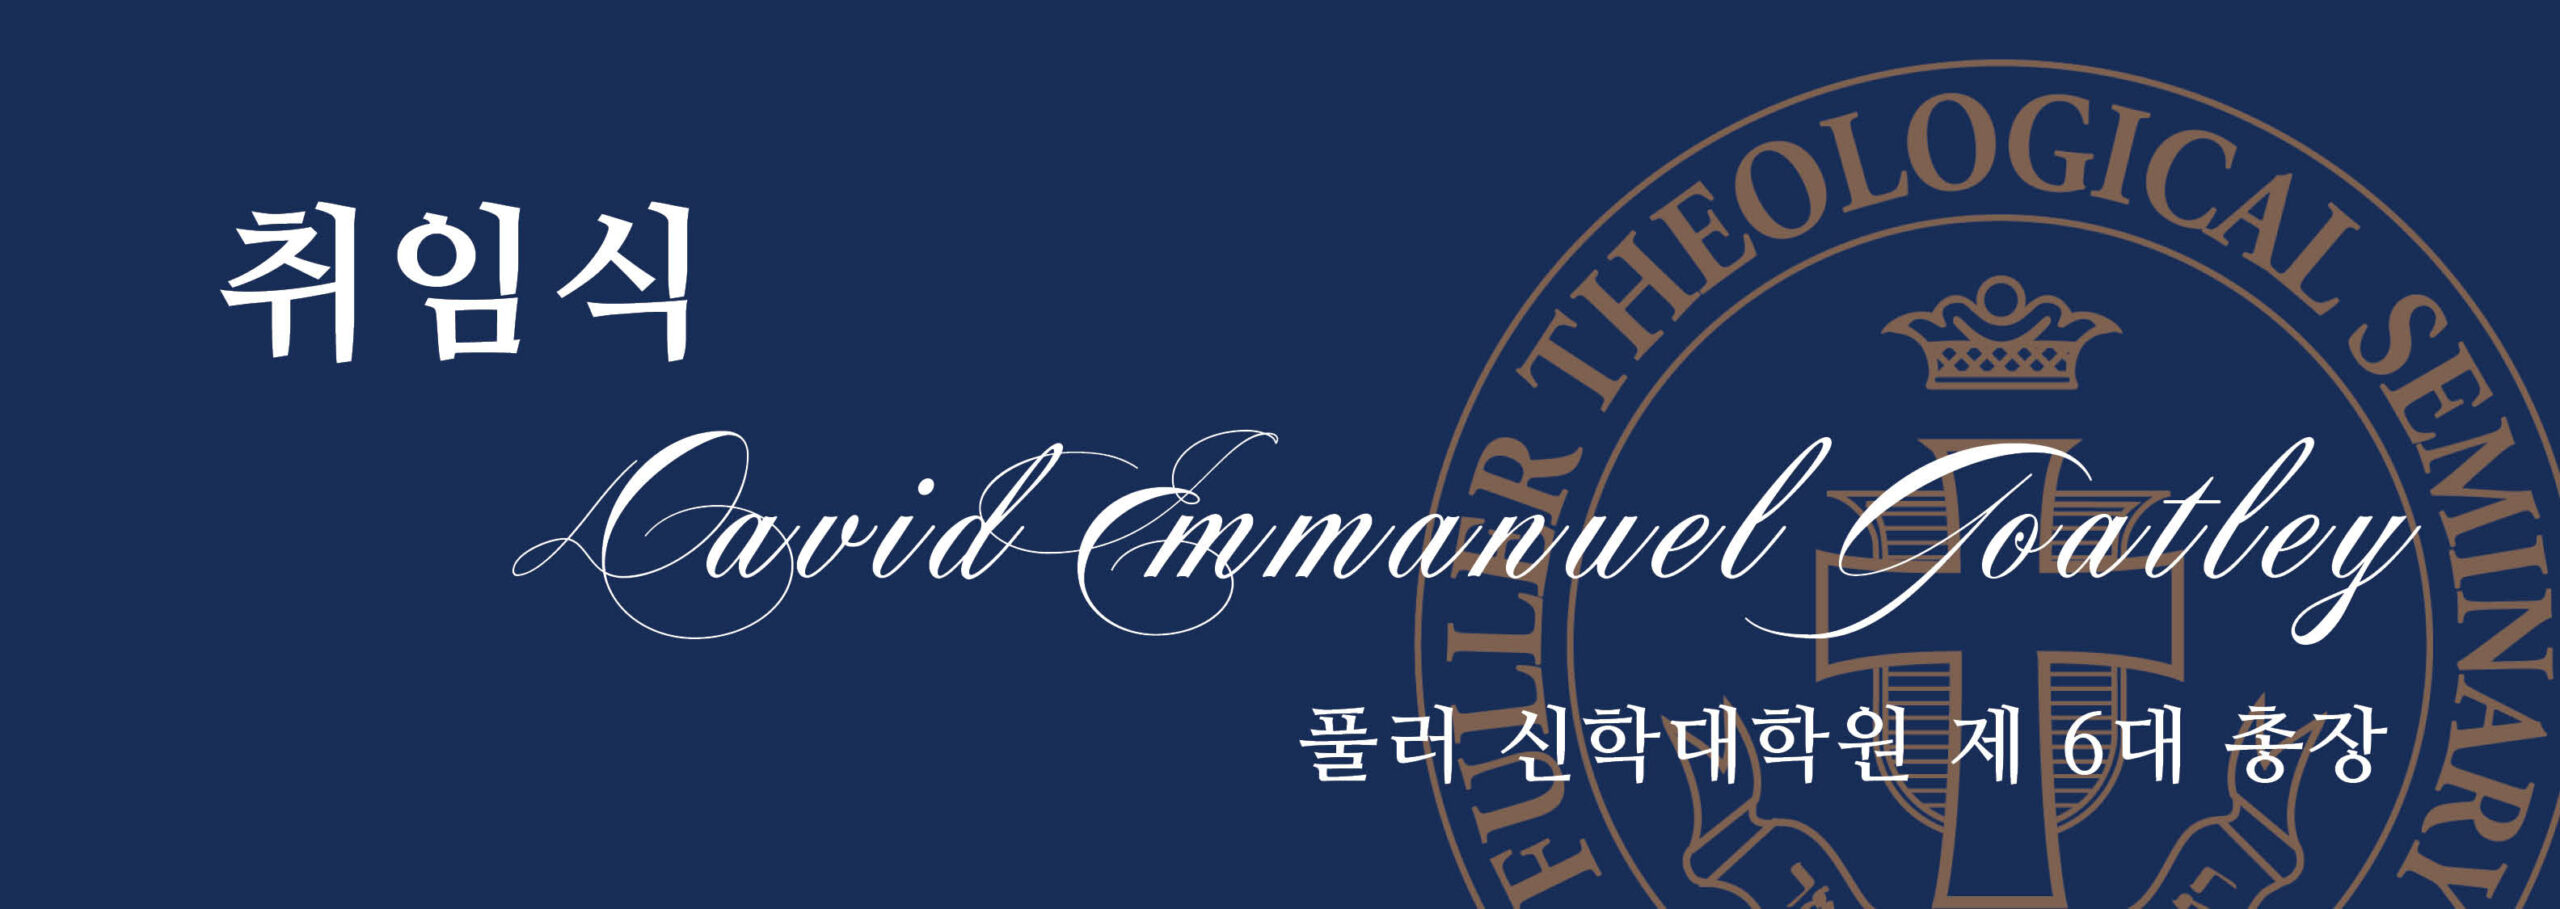 Inauguration Banner in Korean